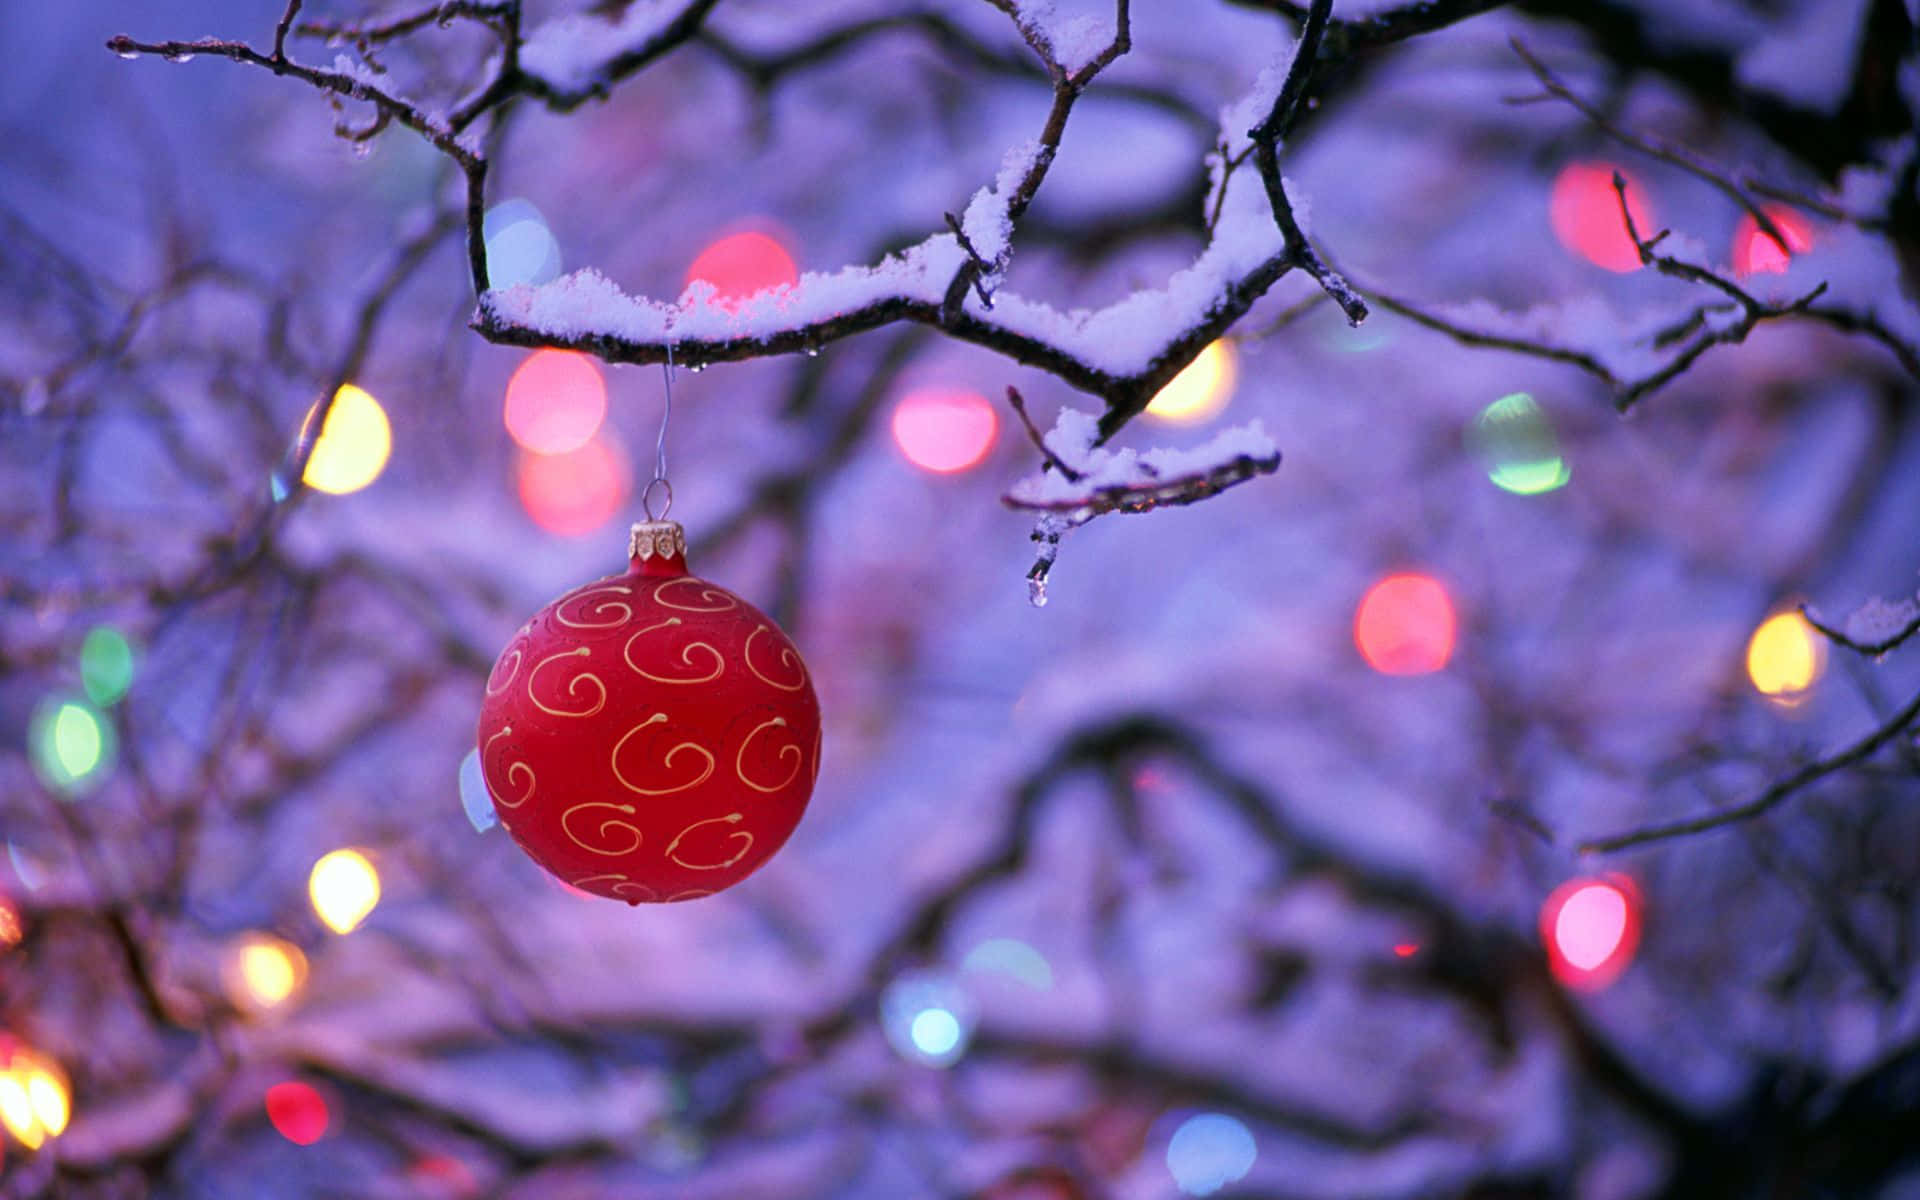 Enchanting Winter Wonderland with Christmas Spirit